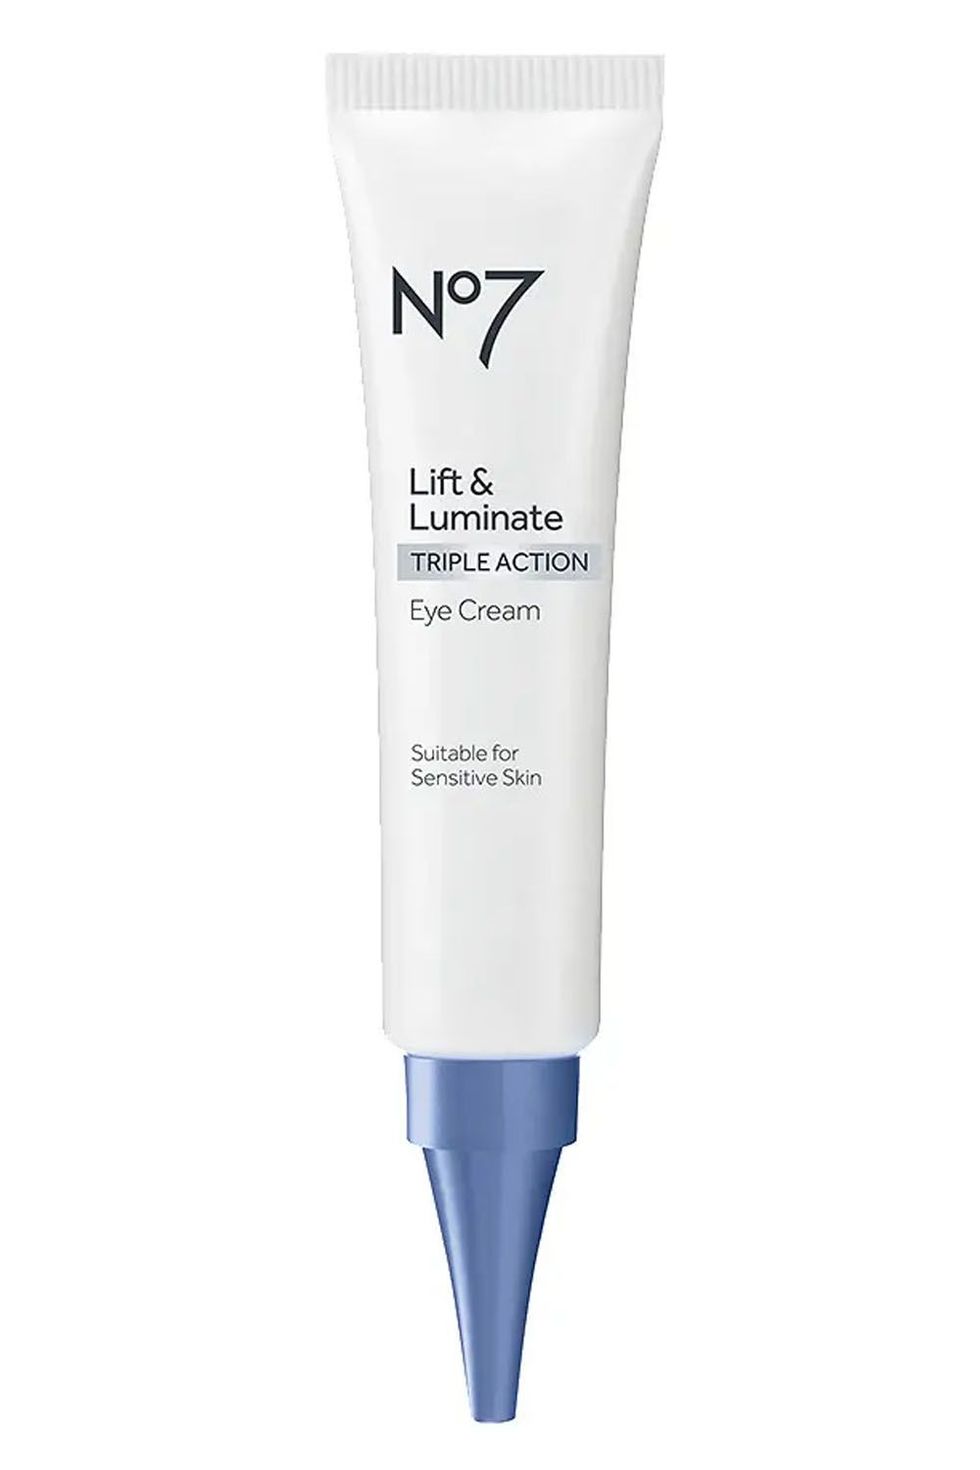 No7 Lift and Luminate Triple Action Eye Cream